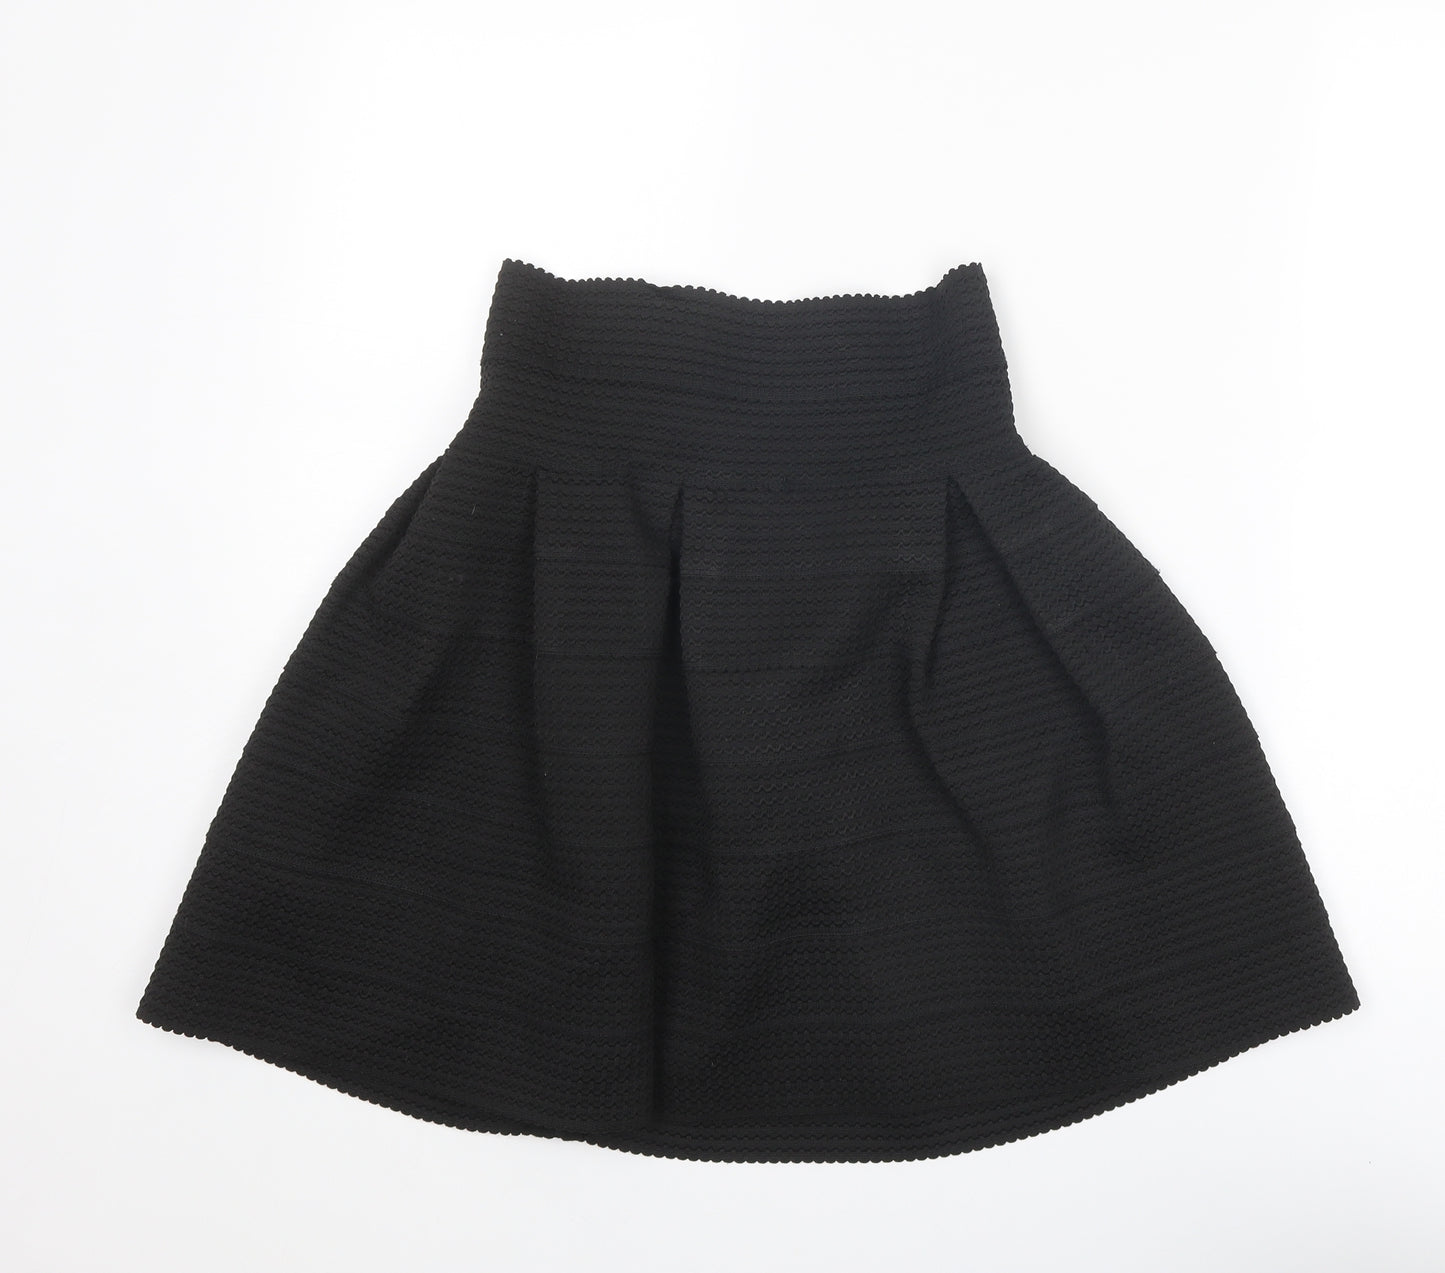 H&M Womens Black Polyester Tulip Skirt Size S